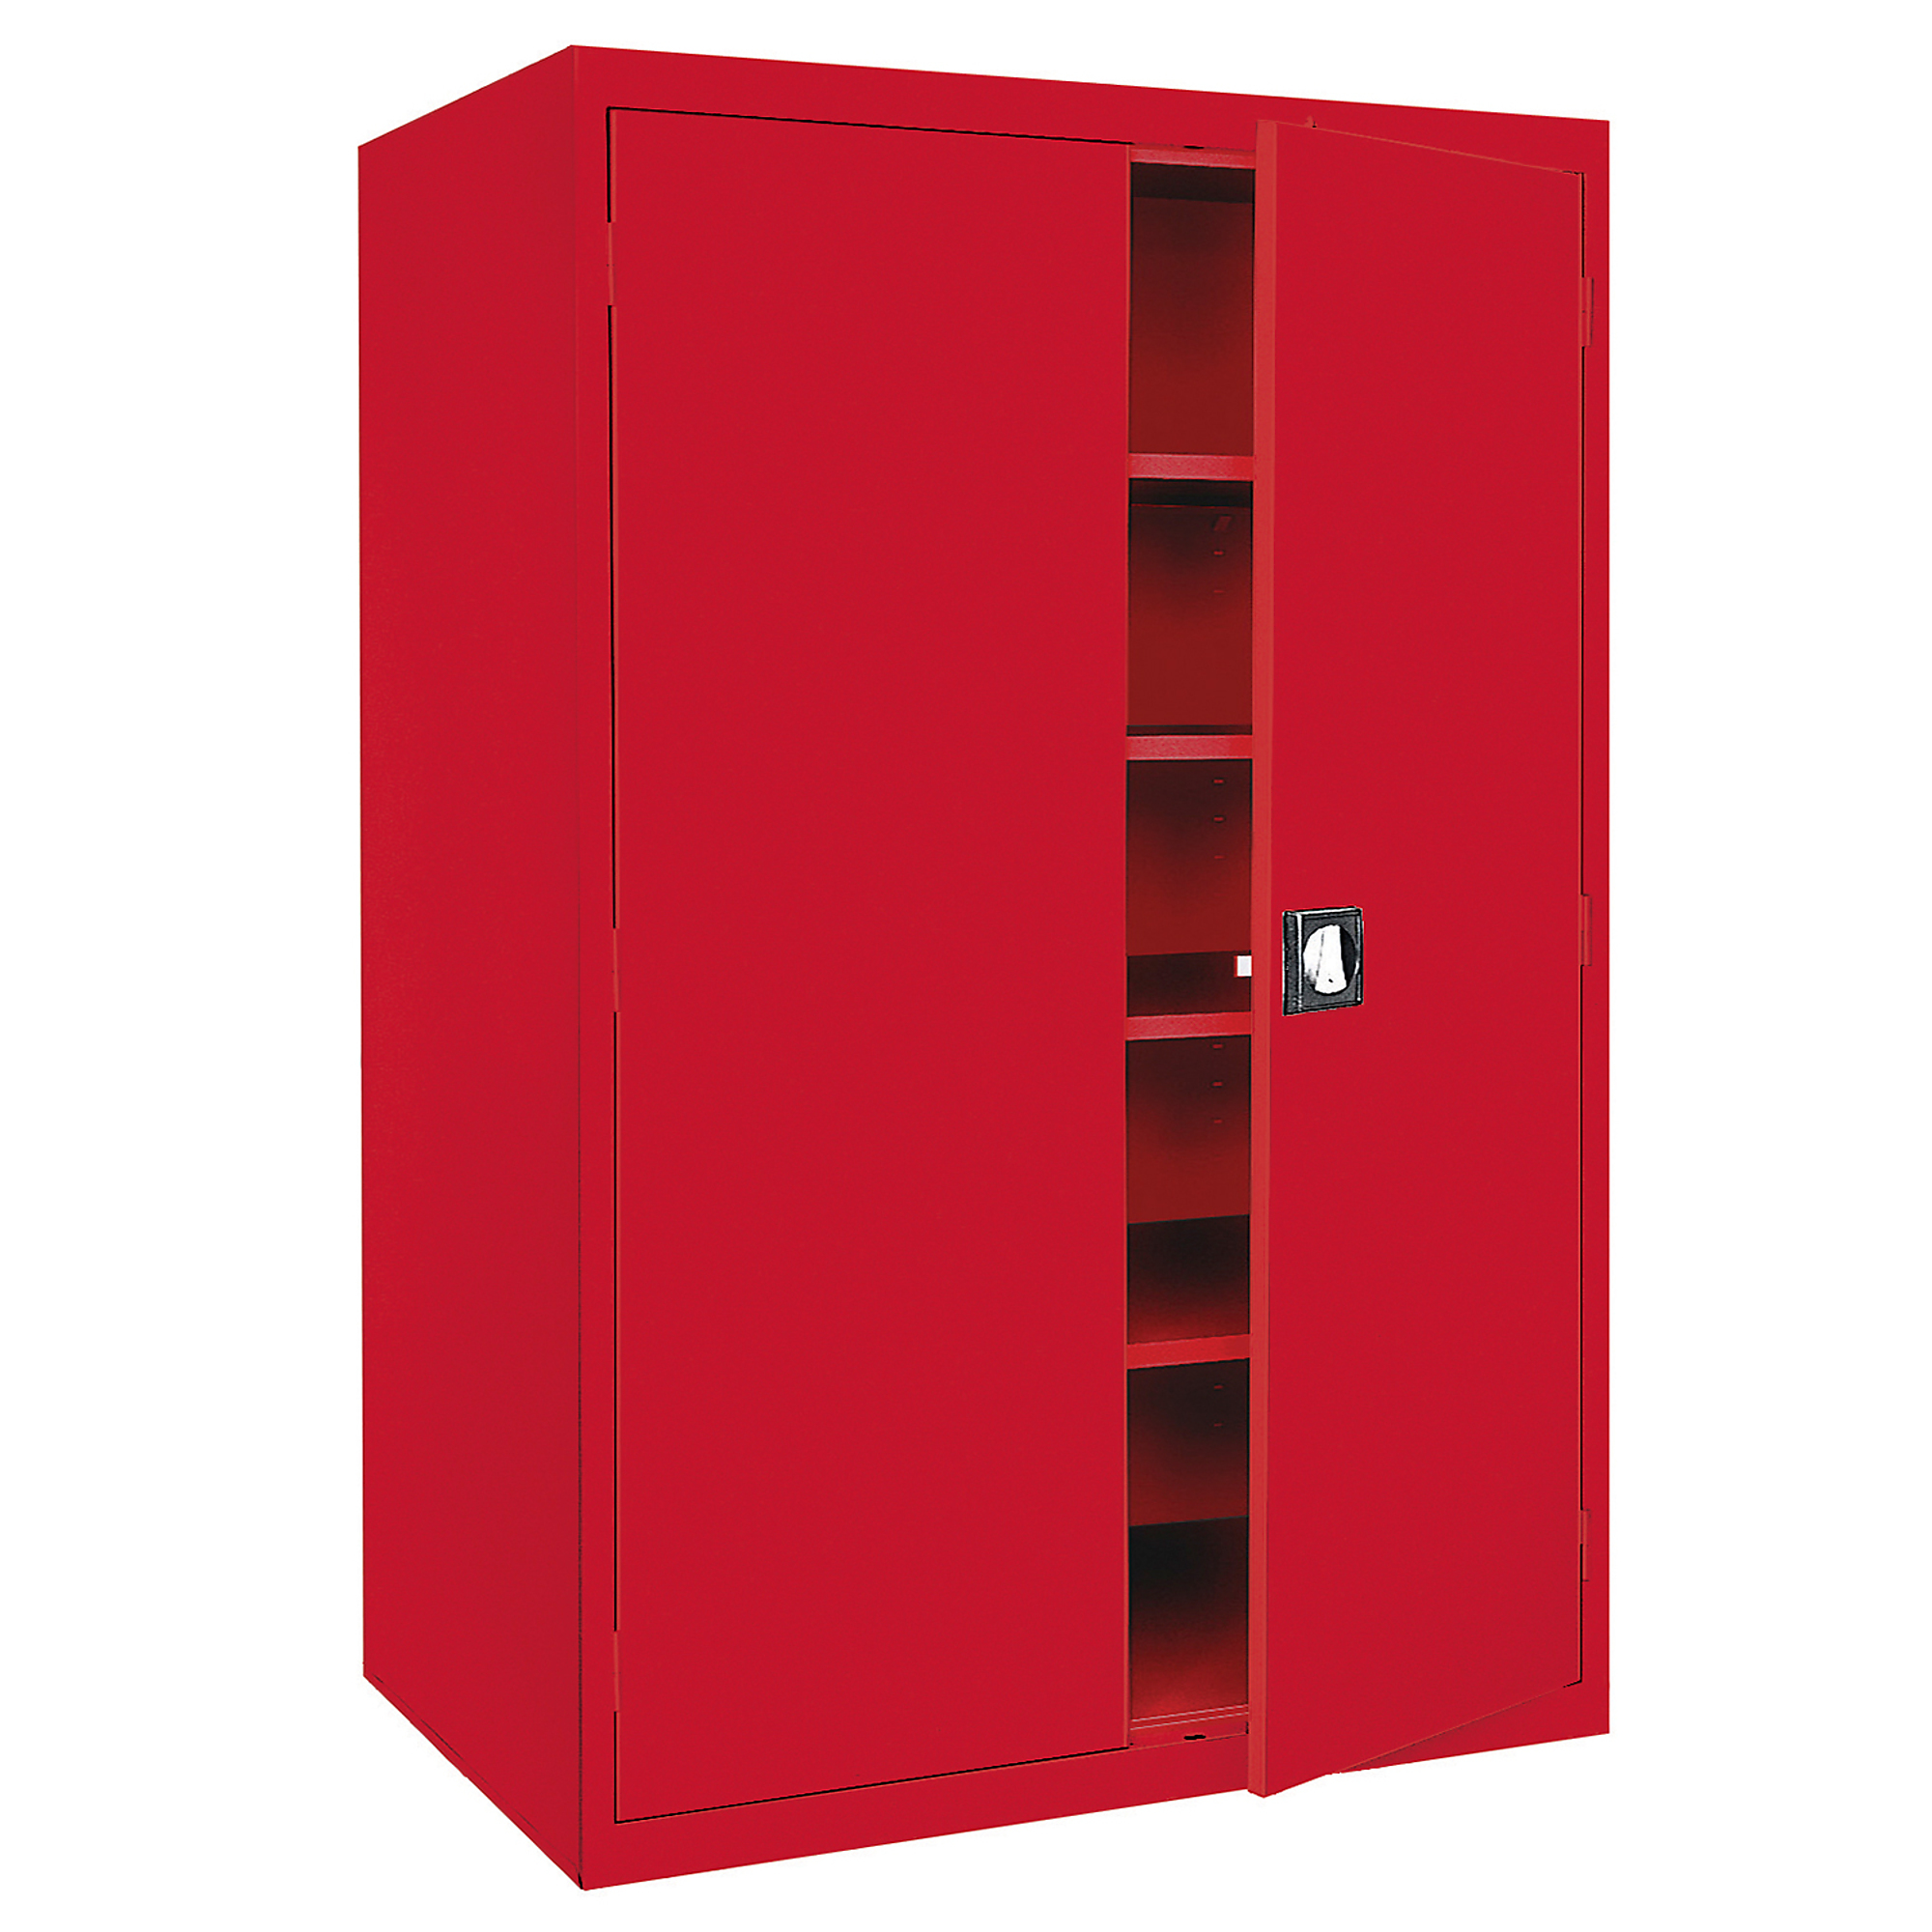 Sandusky, Elite Series Welded Cabinet 46x24x72 - Red, Height 72 in, Width 46 in, Color Red, Model - Sandusky Lee EA4R462472-01